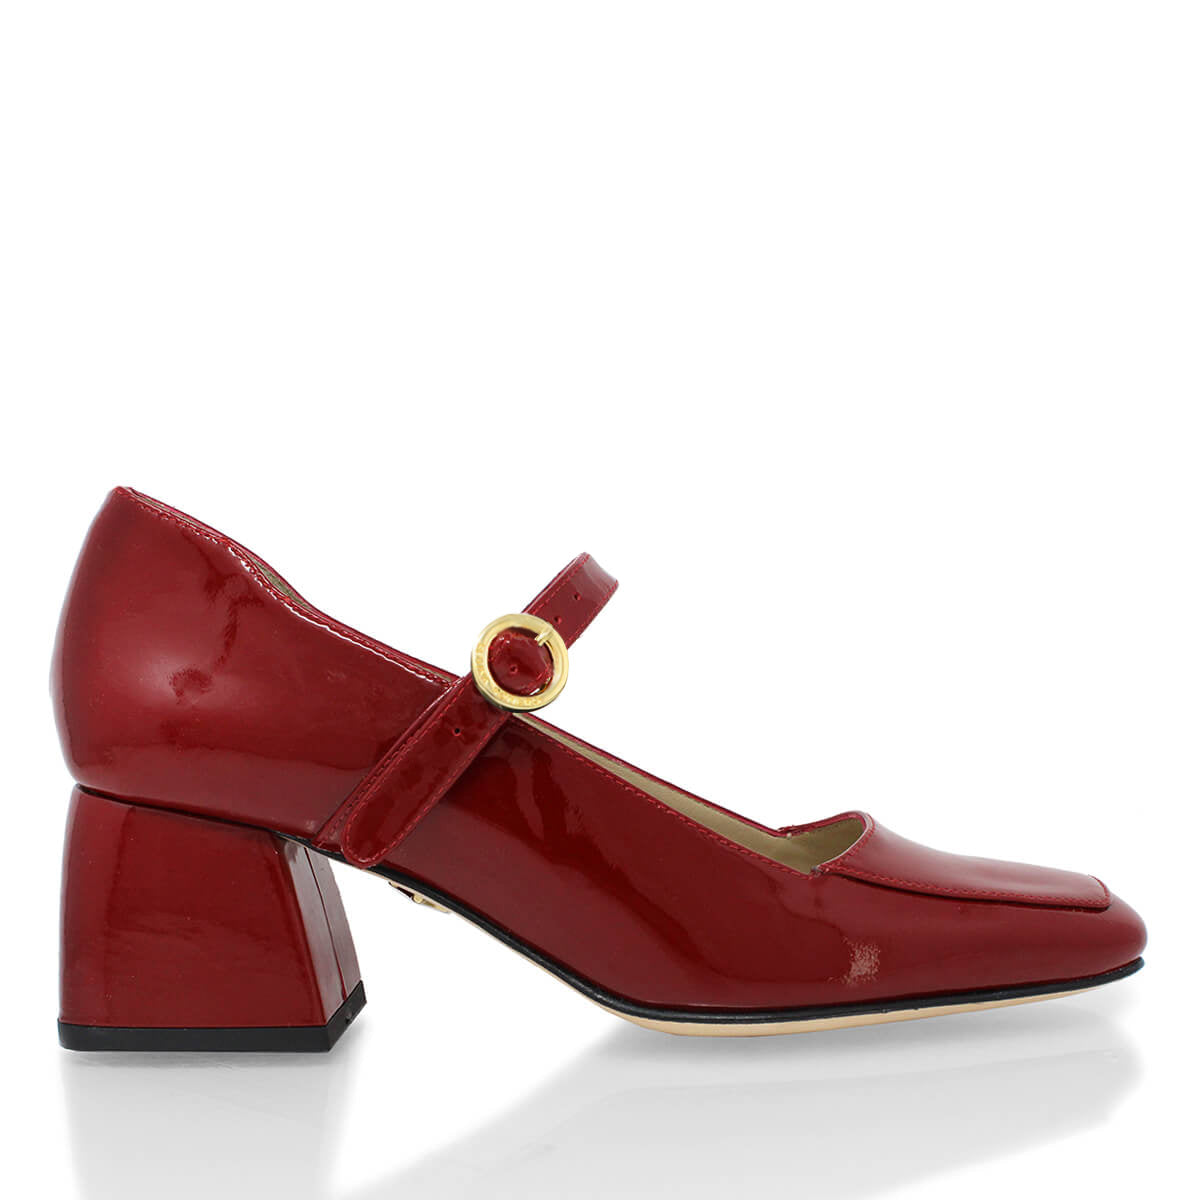 MATI 50 - Patent Cherry Regina Romero Low Heel Sneaker Shoe for Women in Leather